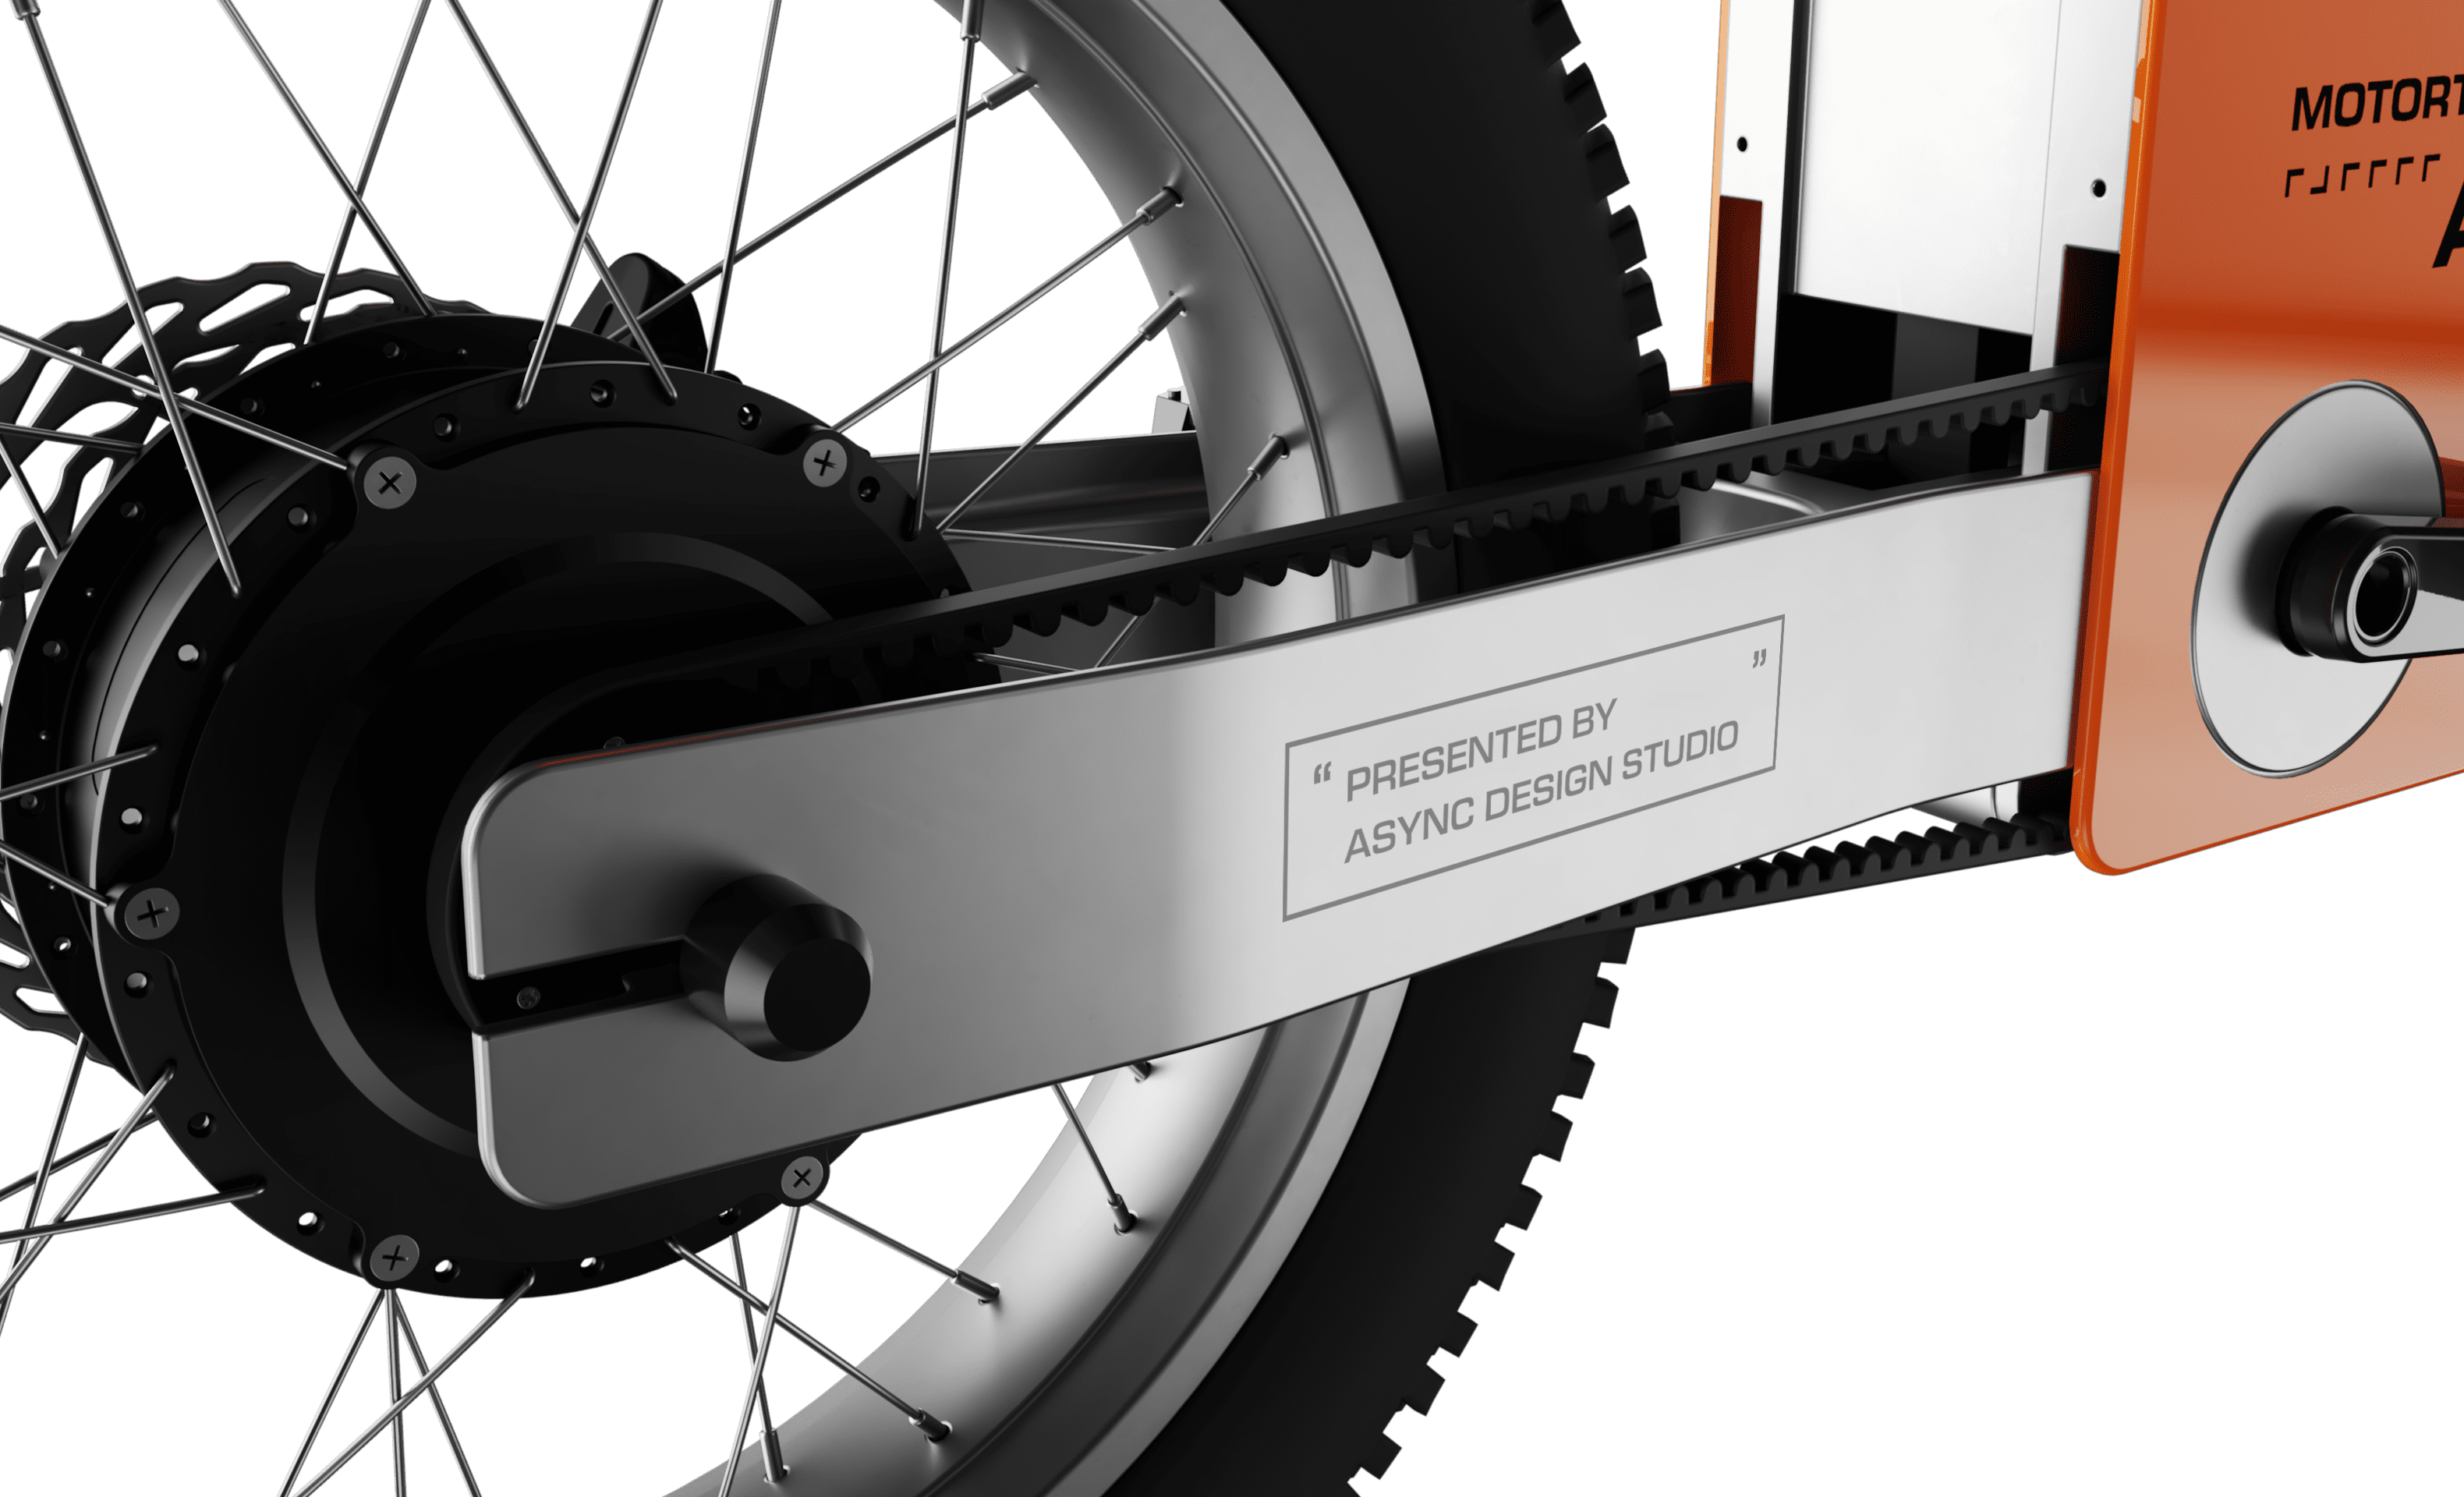 Async A1 Pro Electric Bike - Cycleson